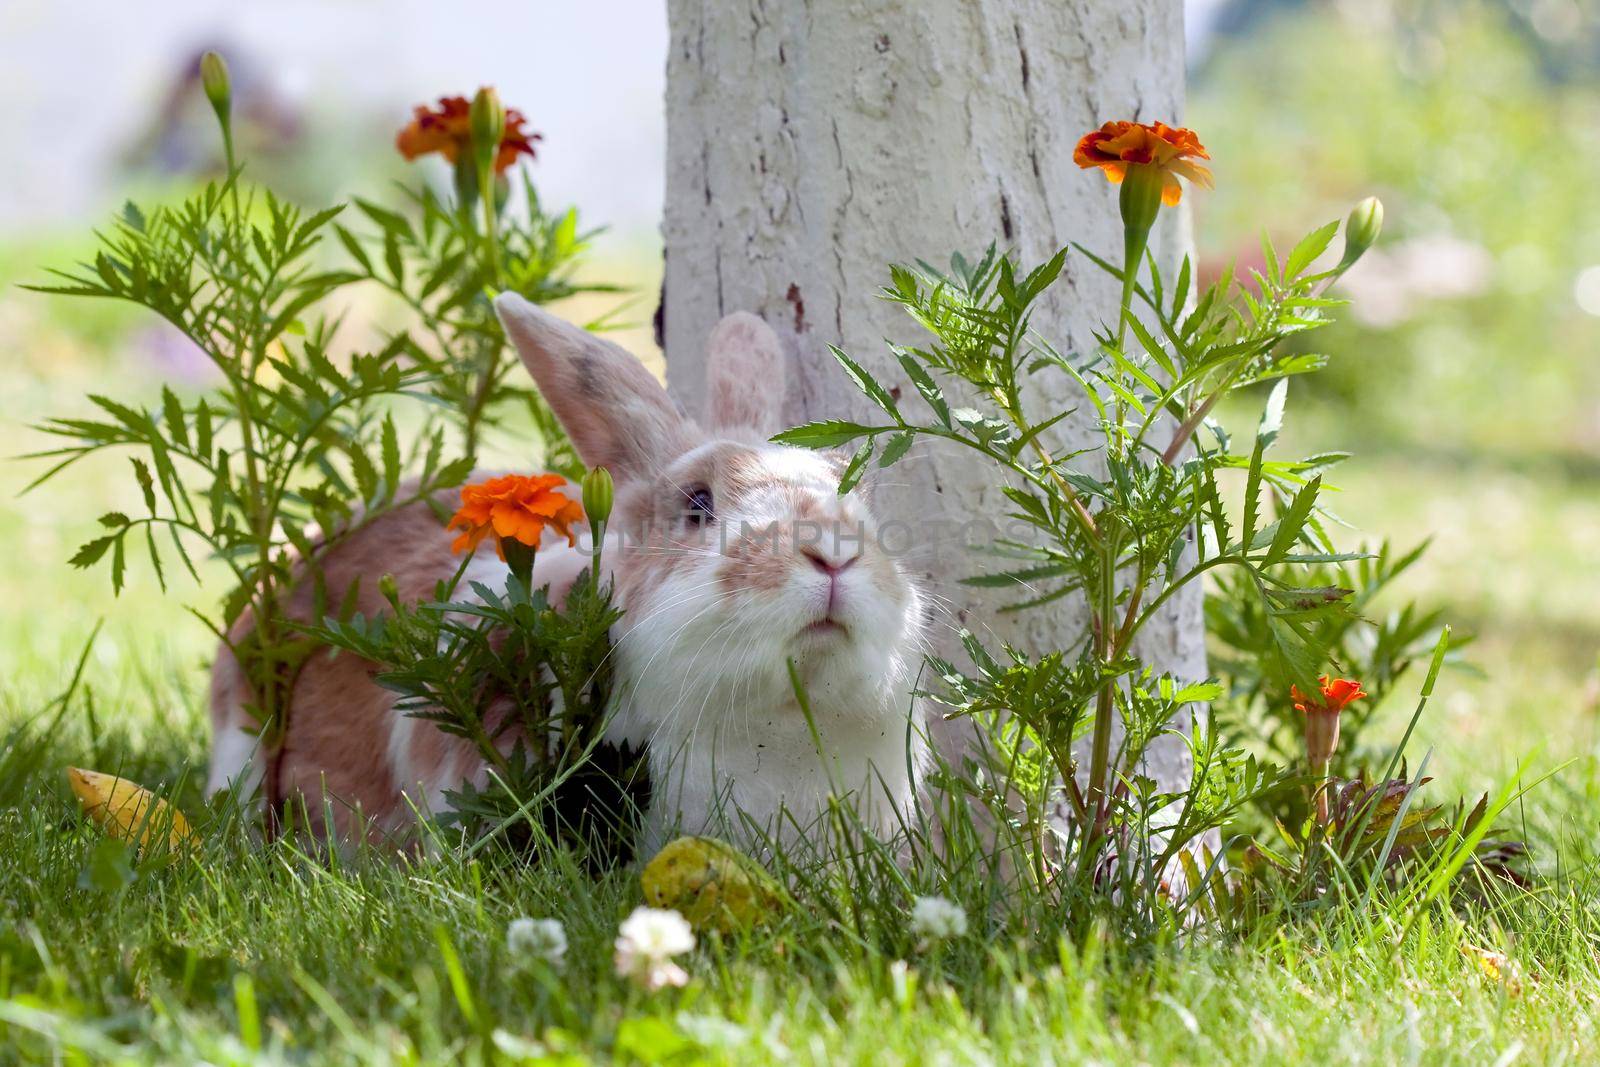 Cute rabbit lying on the grass between orange flowers